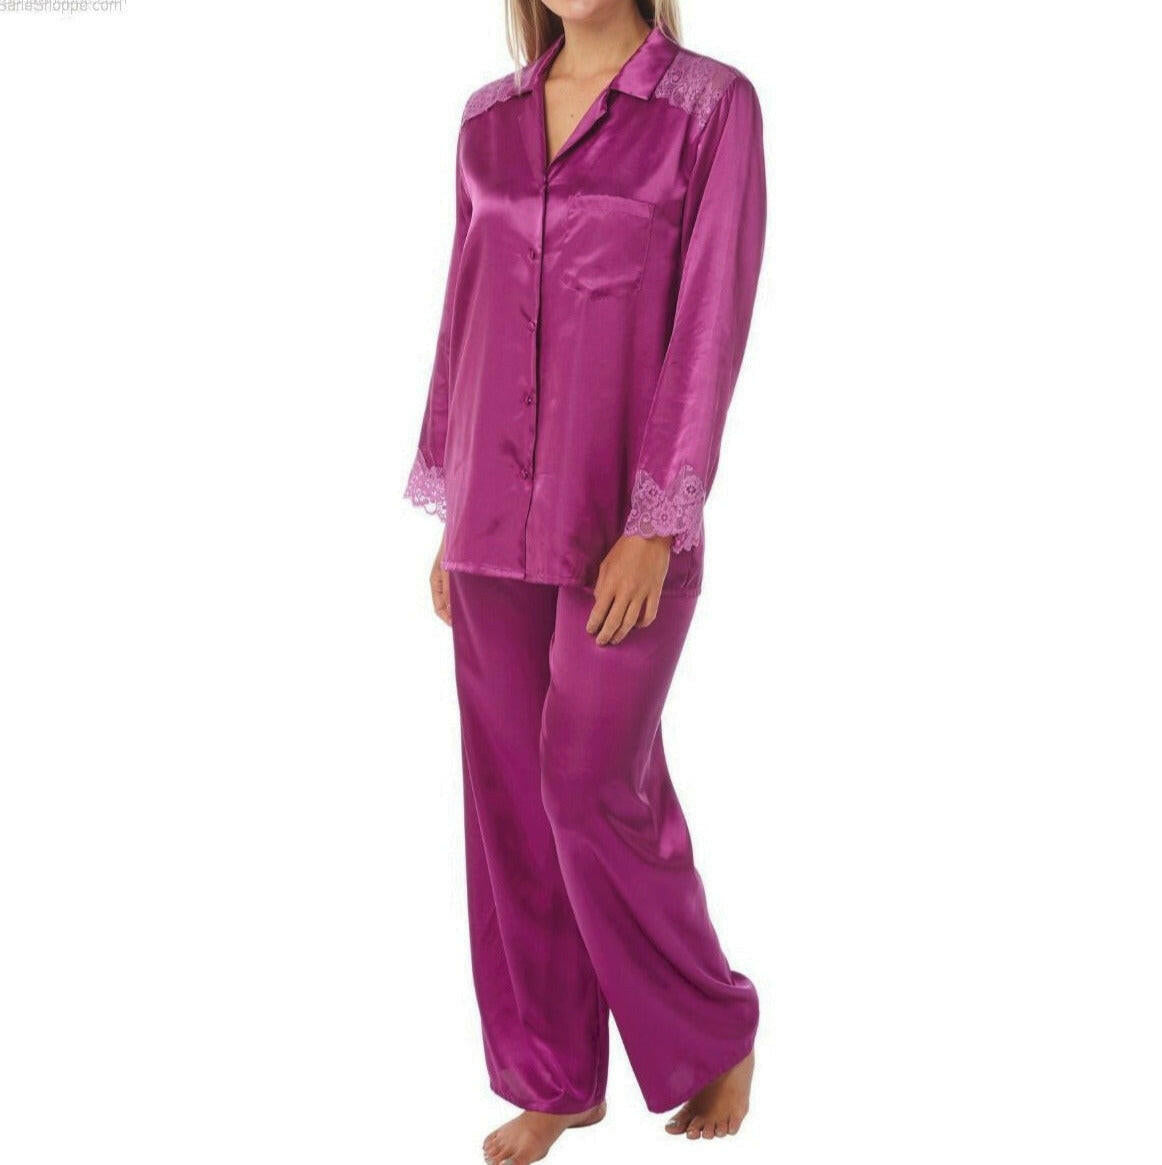 Women’s Satin Pyjamas Long Sleeve Nightwear Loungewear Set Fushia - SaneShoppe